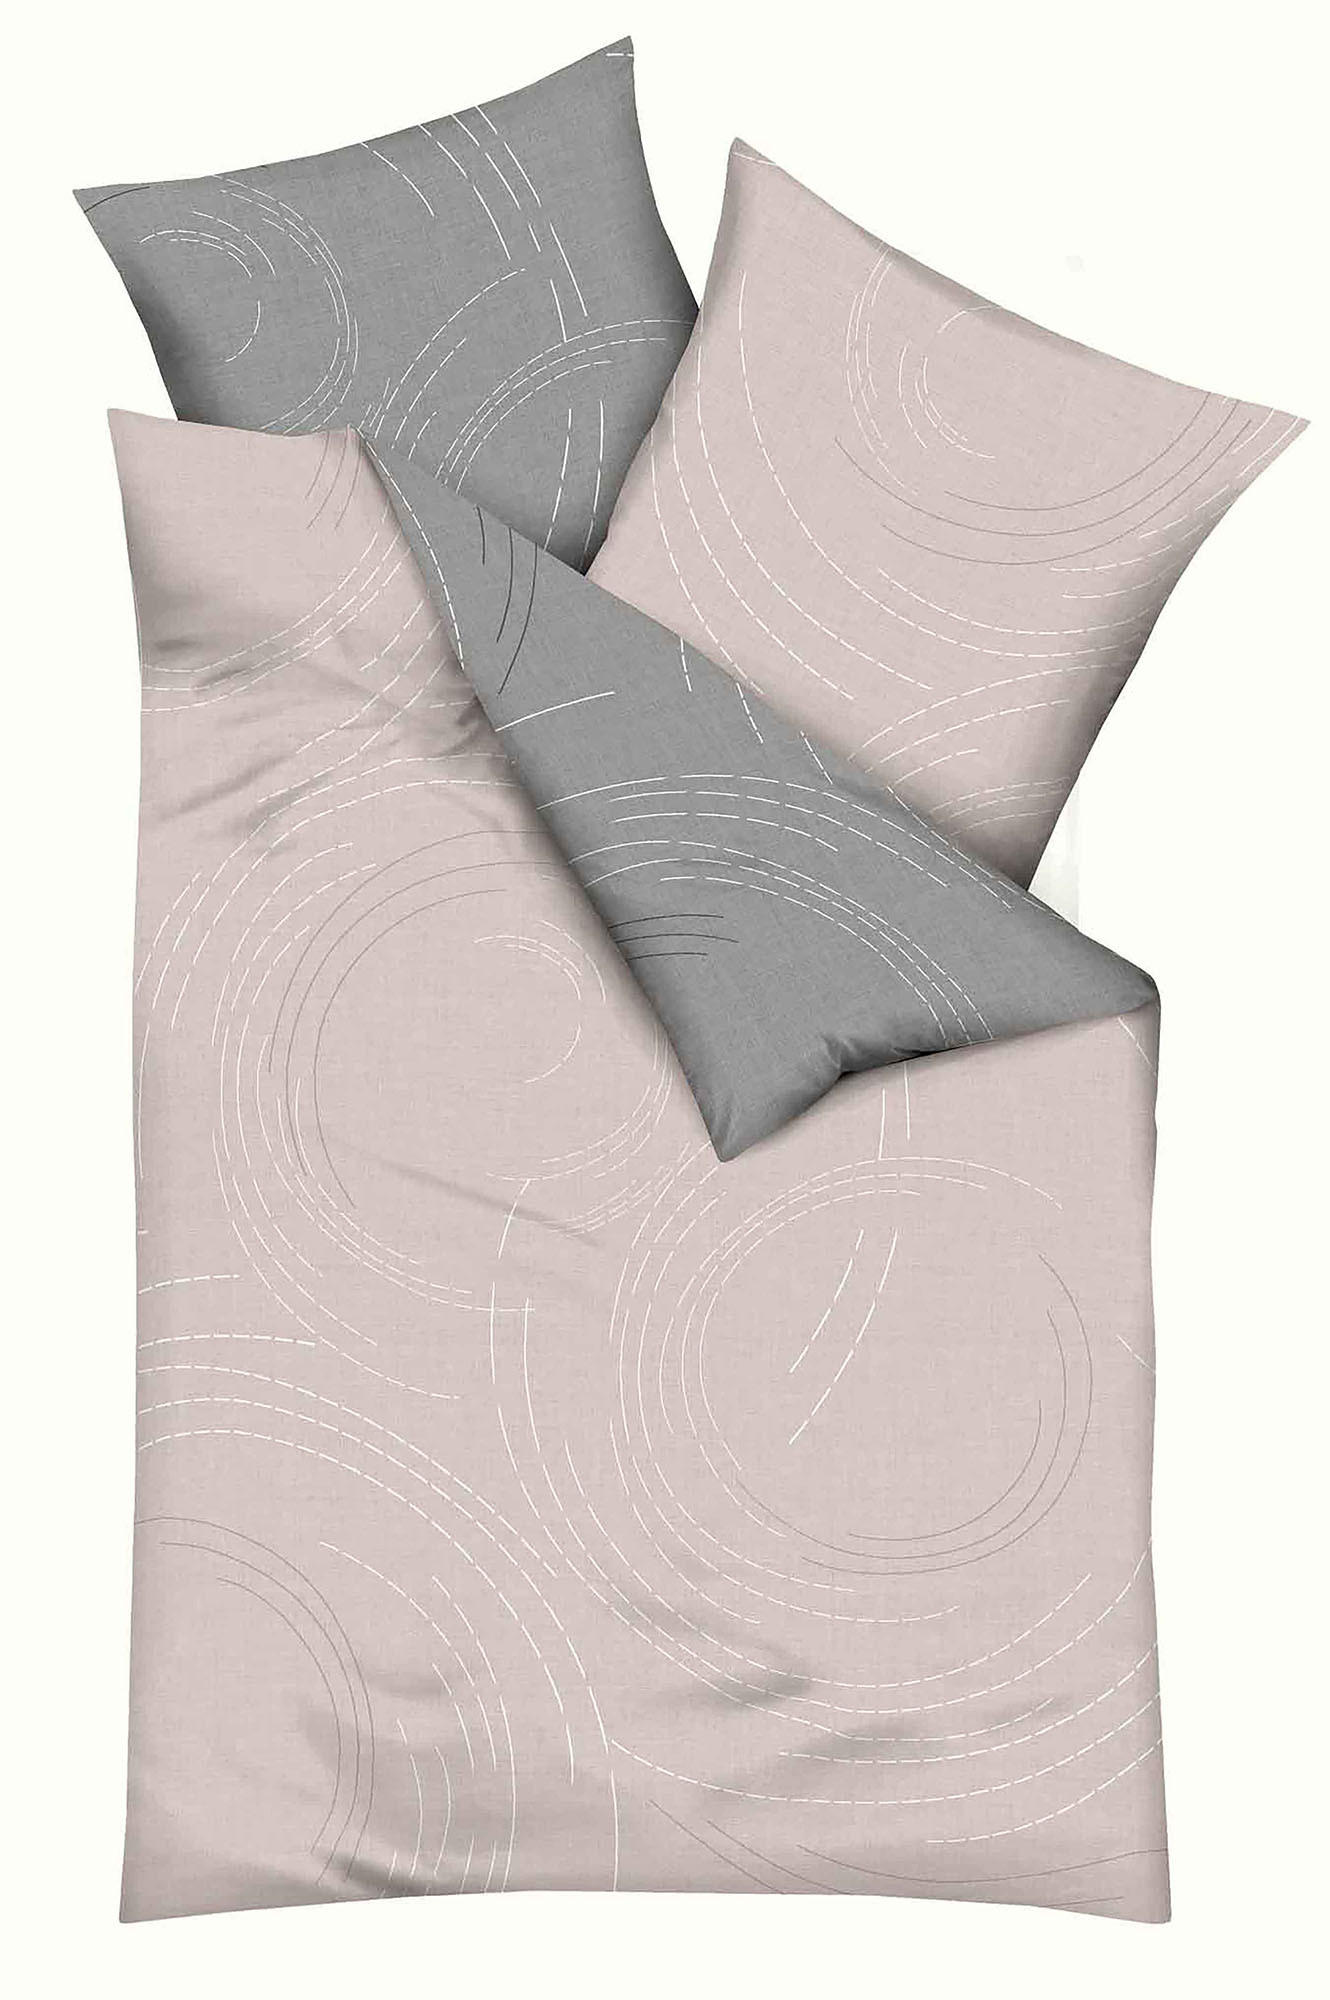 POSTELJNINA Jaro 140/200 cm saten siva, roza  - roza/siva, Moderno, tekstil (140/200cm) - Kaeppel